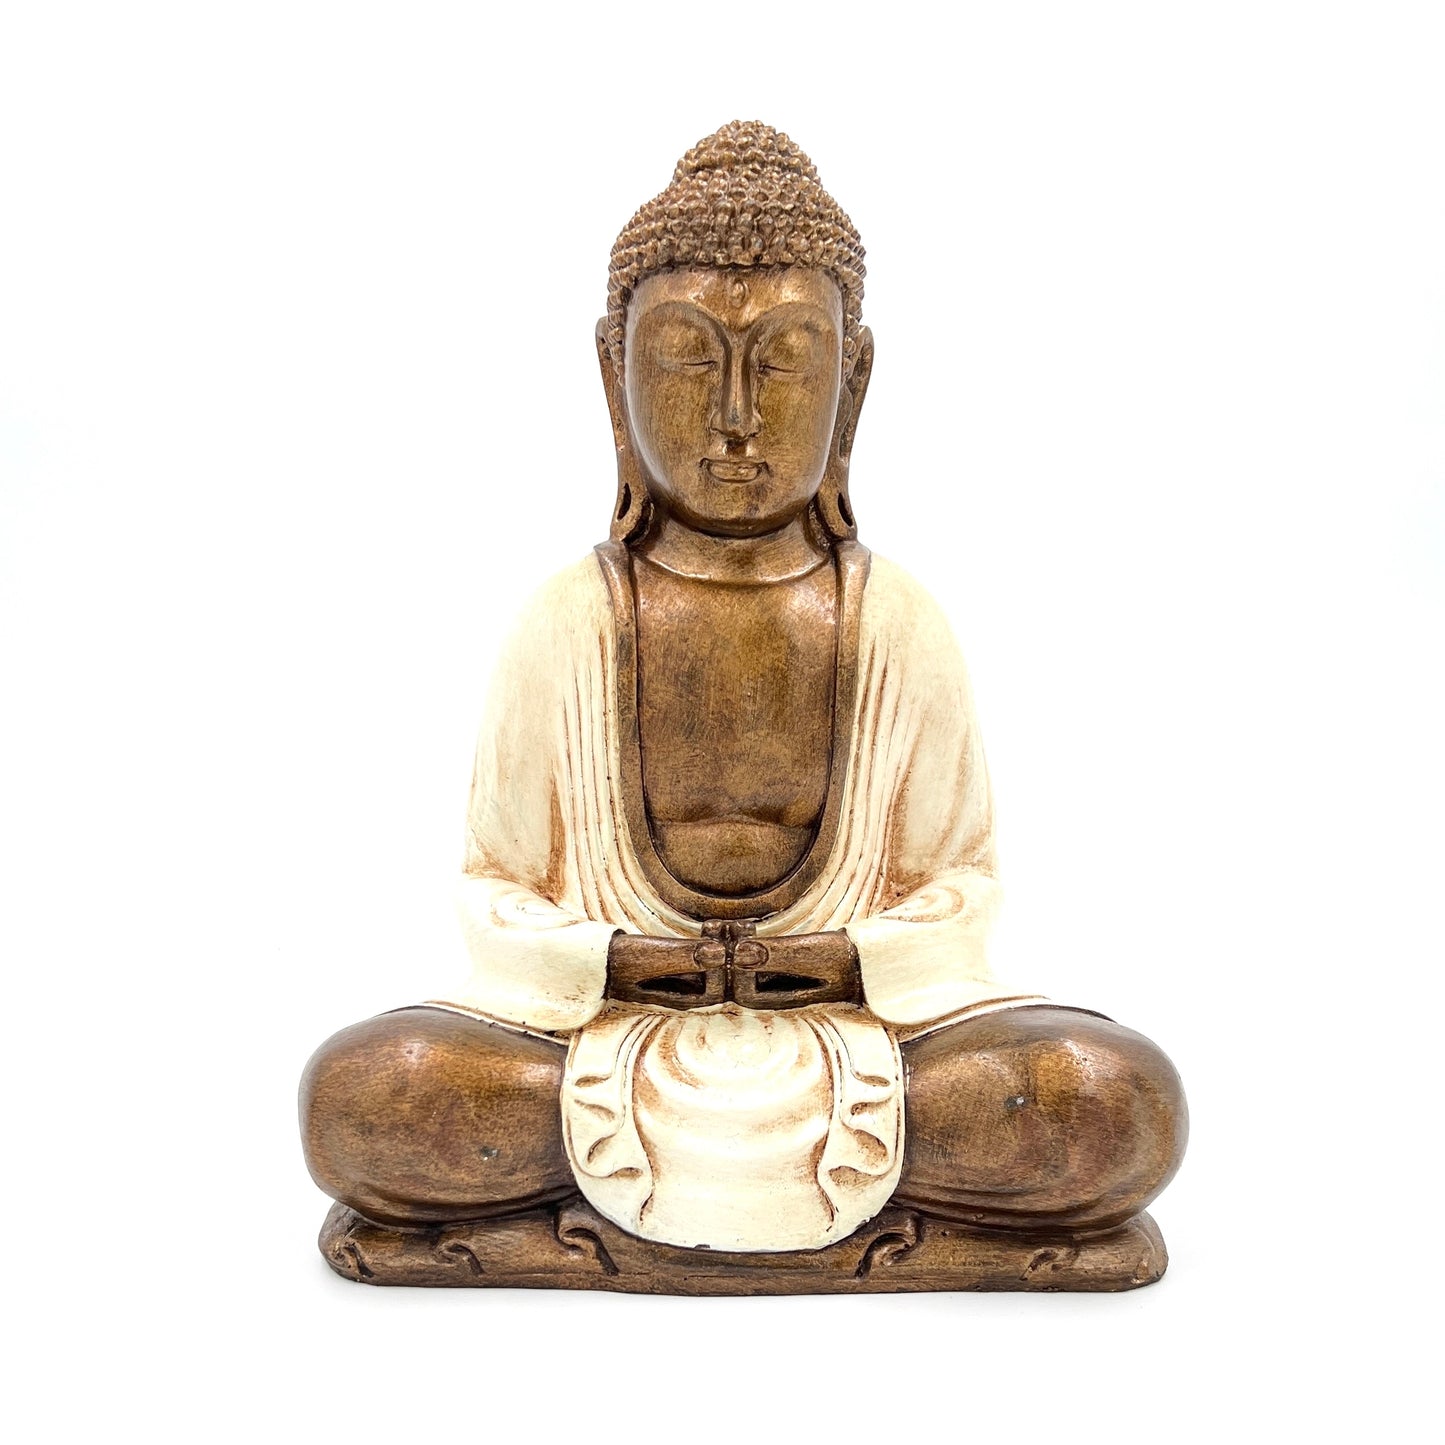 Hand Painted Resin Meditating Buddha Statues